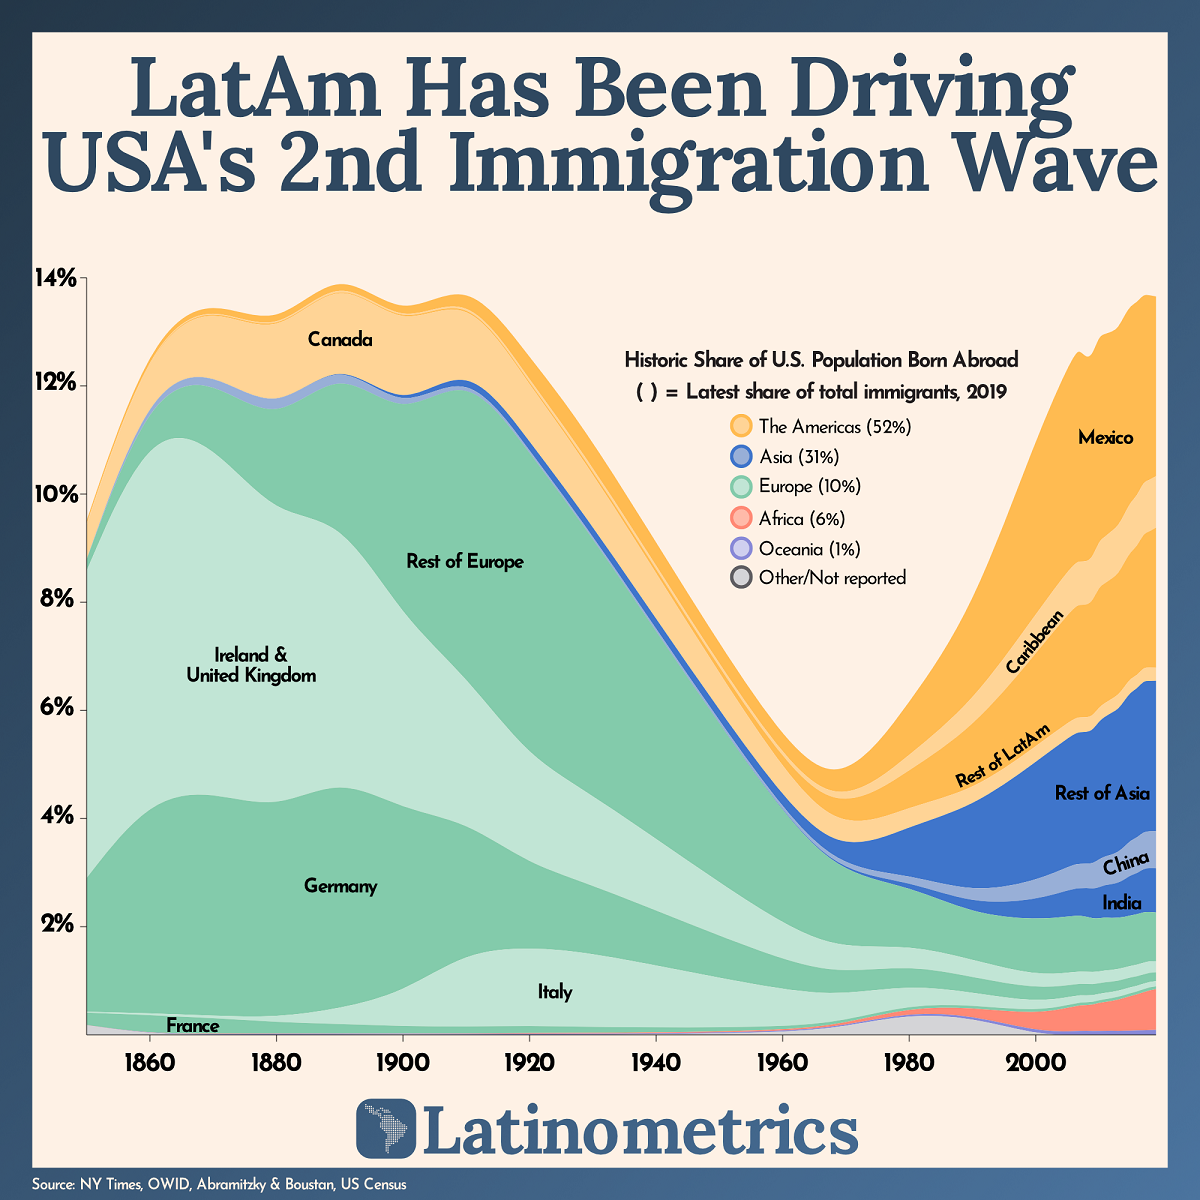 latam immigration driving U.S. growth